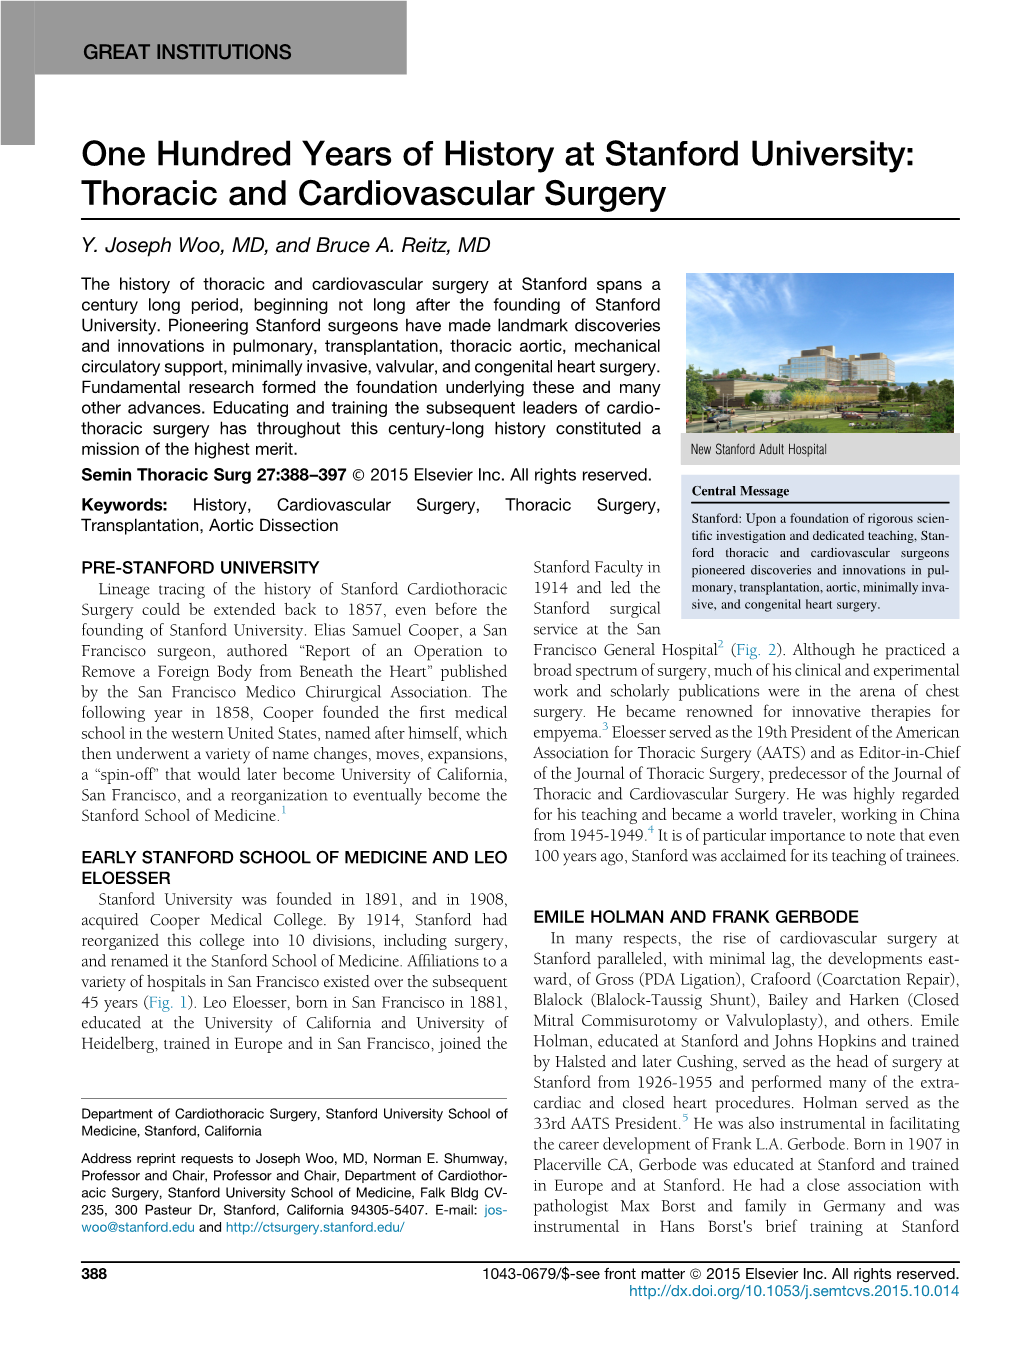 Thoracic and Cardiovascular Surgery